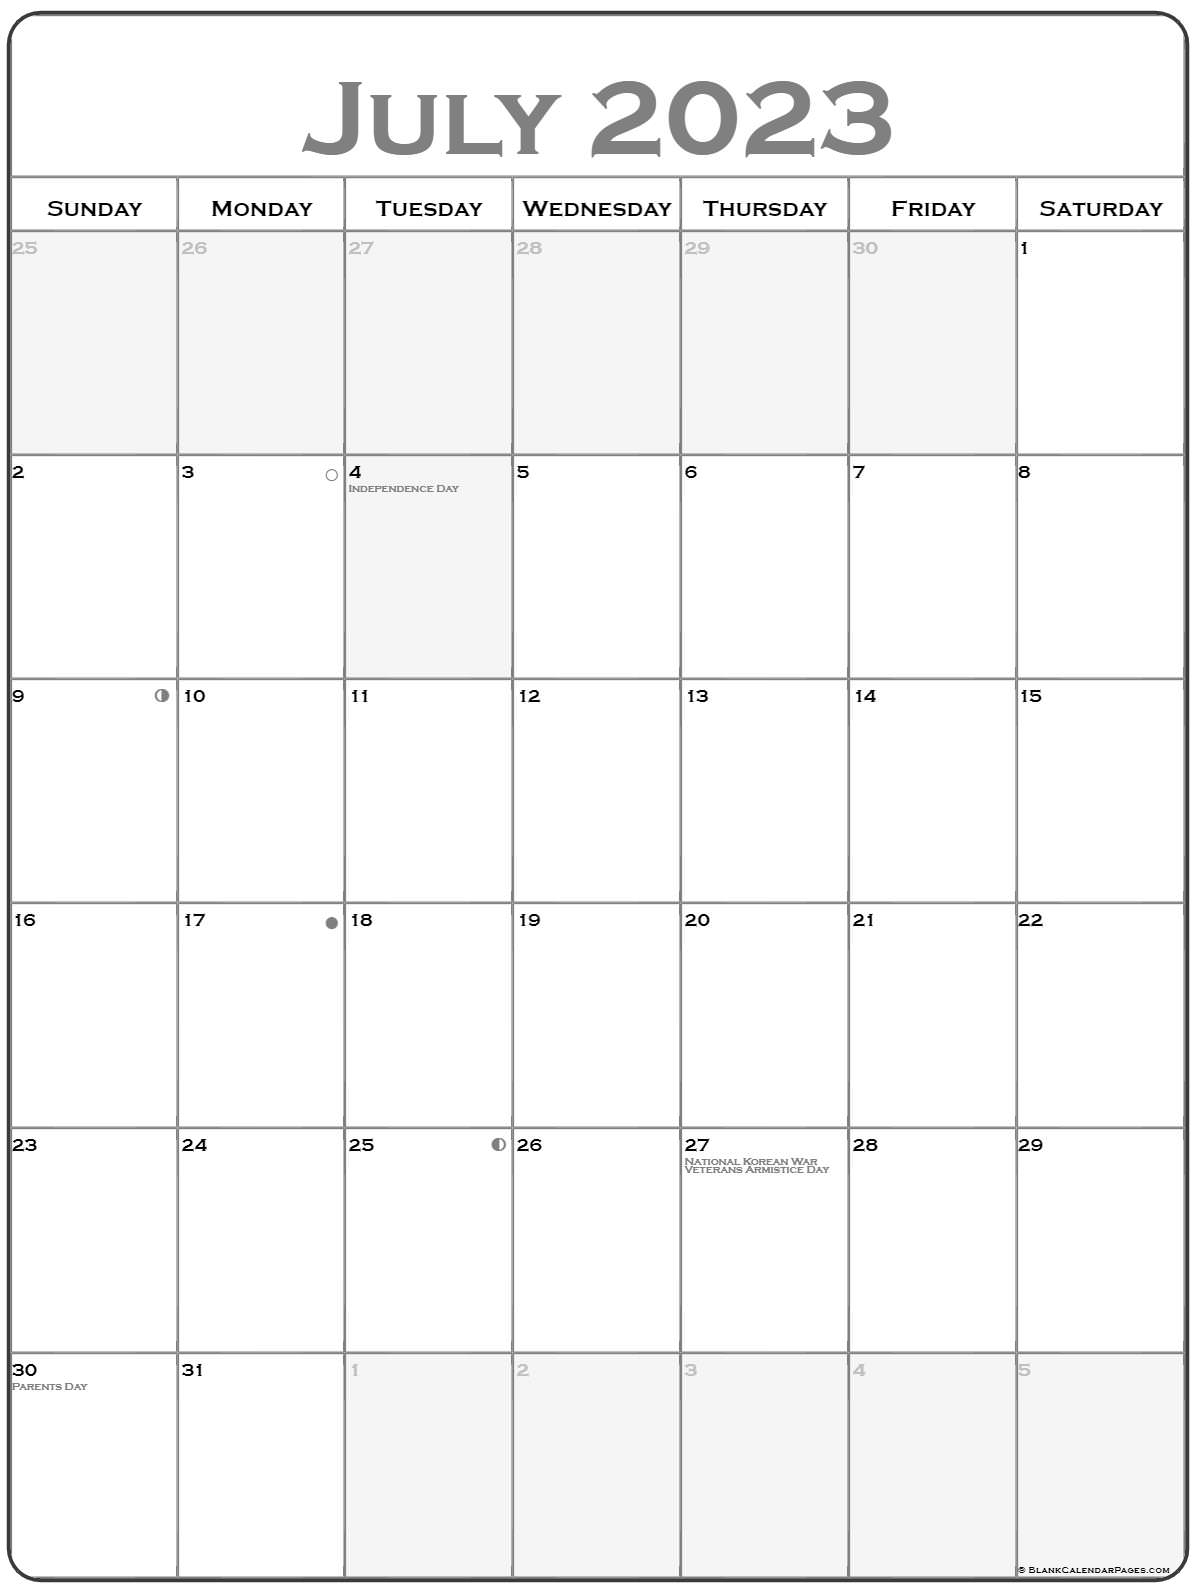 Catch Wiki Calendar January 2022 With Holidays